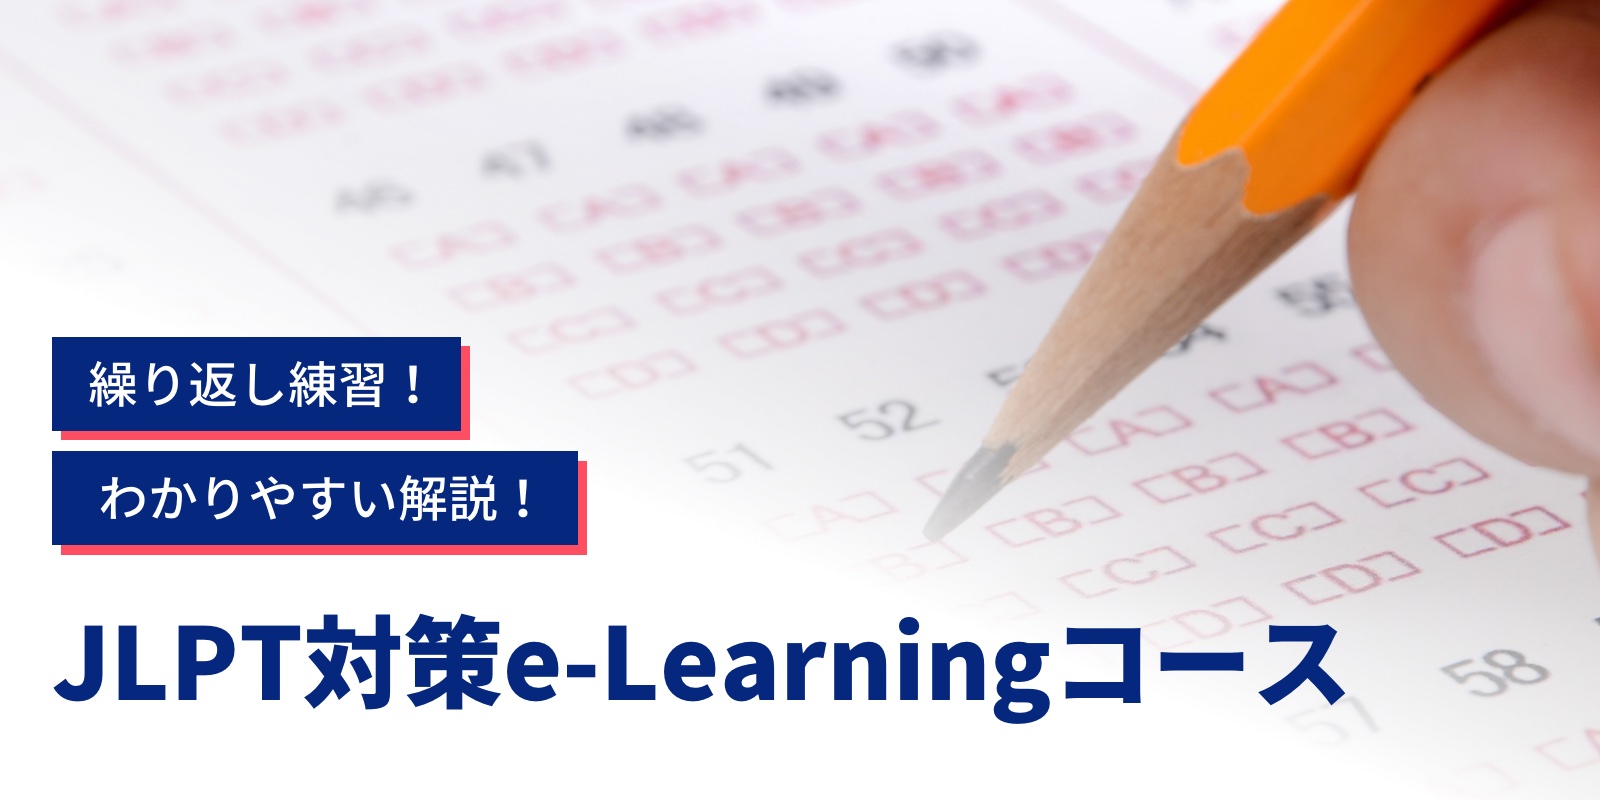 JLPT対策E-Learningコース